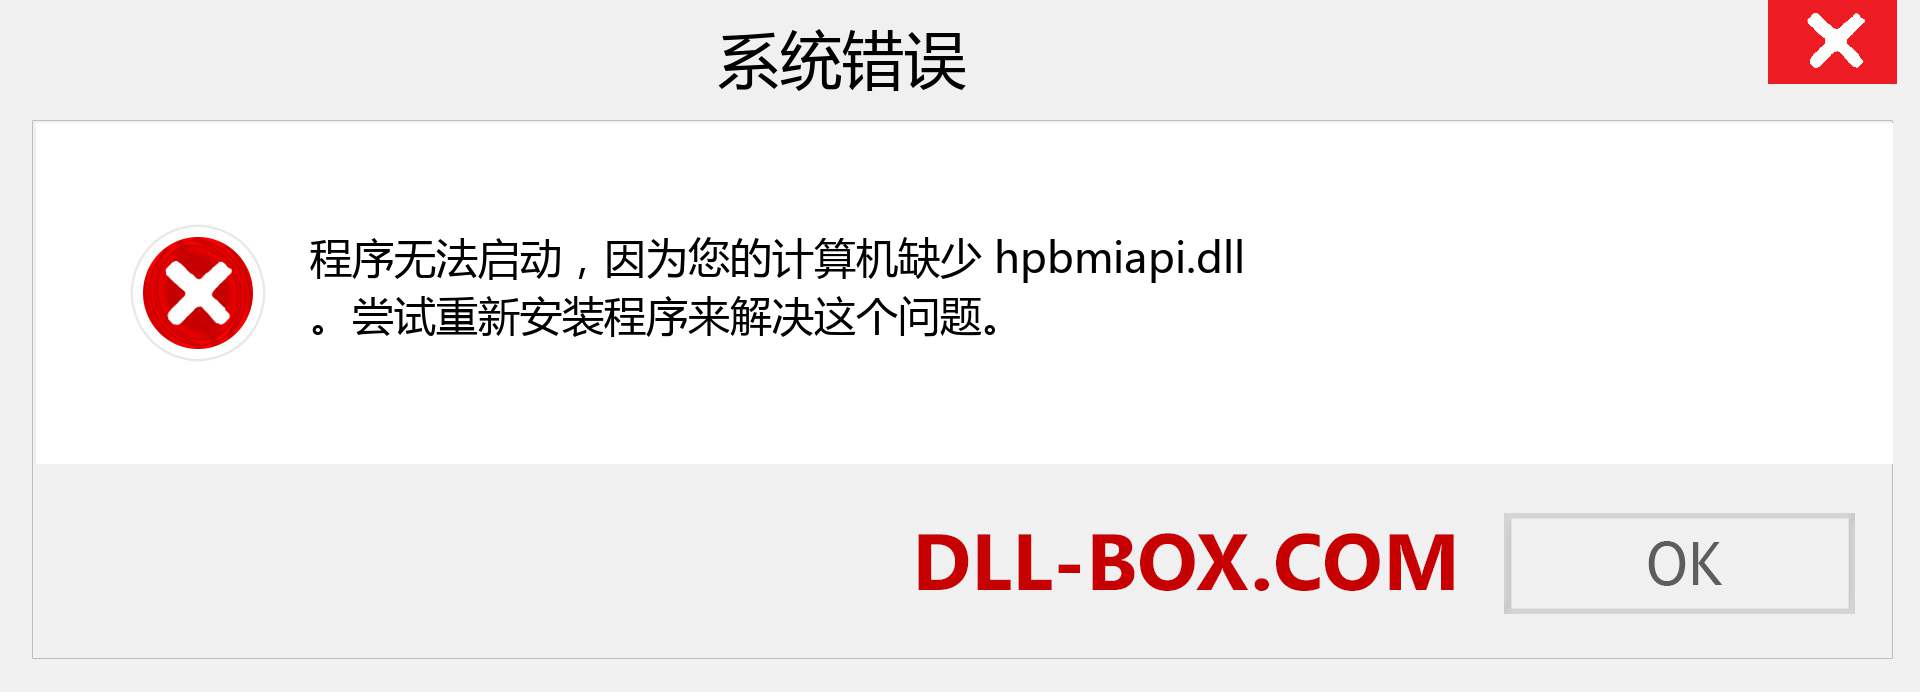 hpbmiapi.dll 文件丢失？。 适用于 Windows 7、8、10 的下载 - 修复 Windows、照片、图像上的 hpbmiapi dll 丢失错误